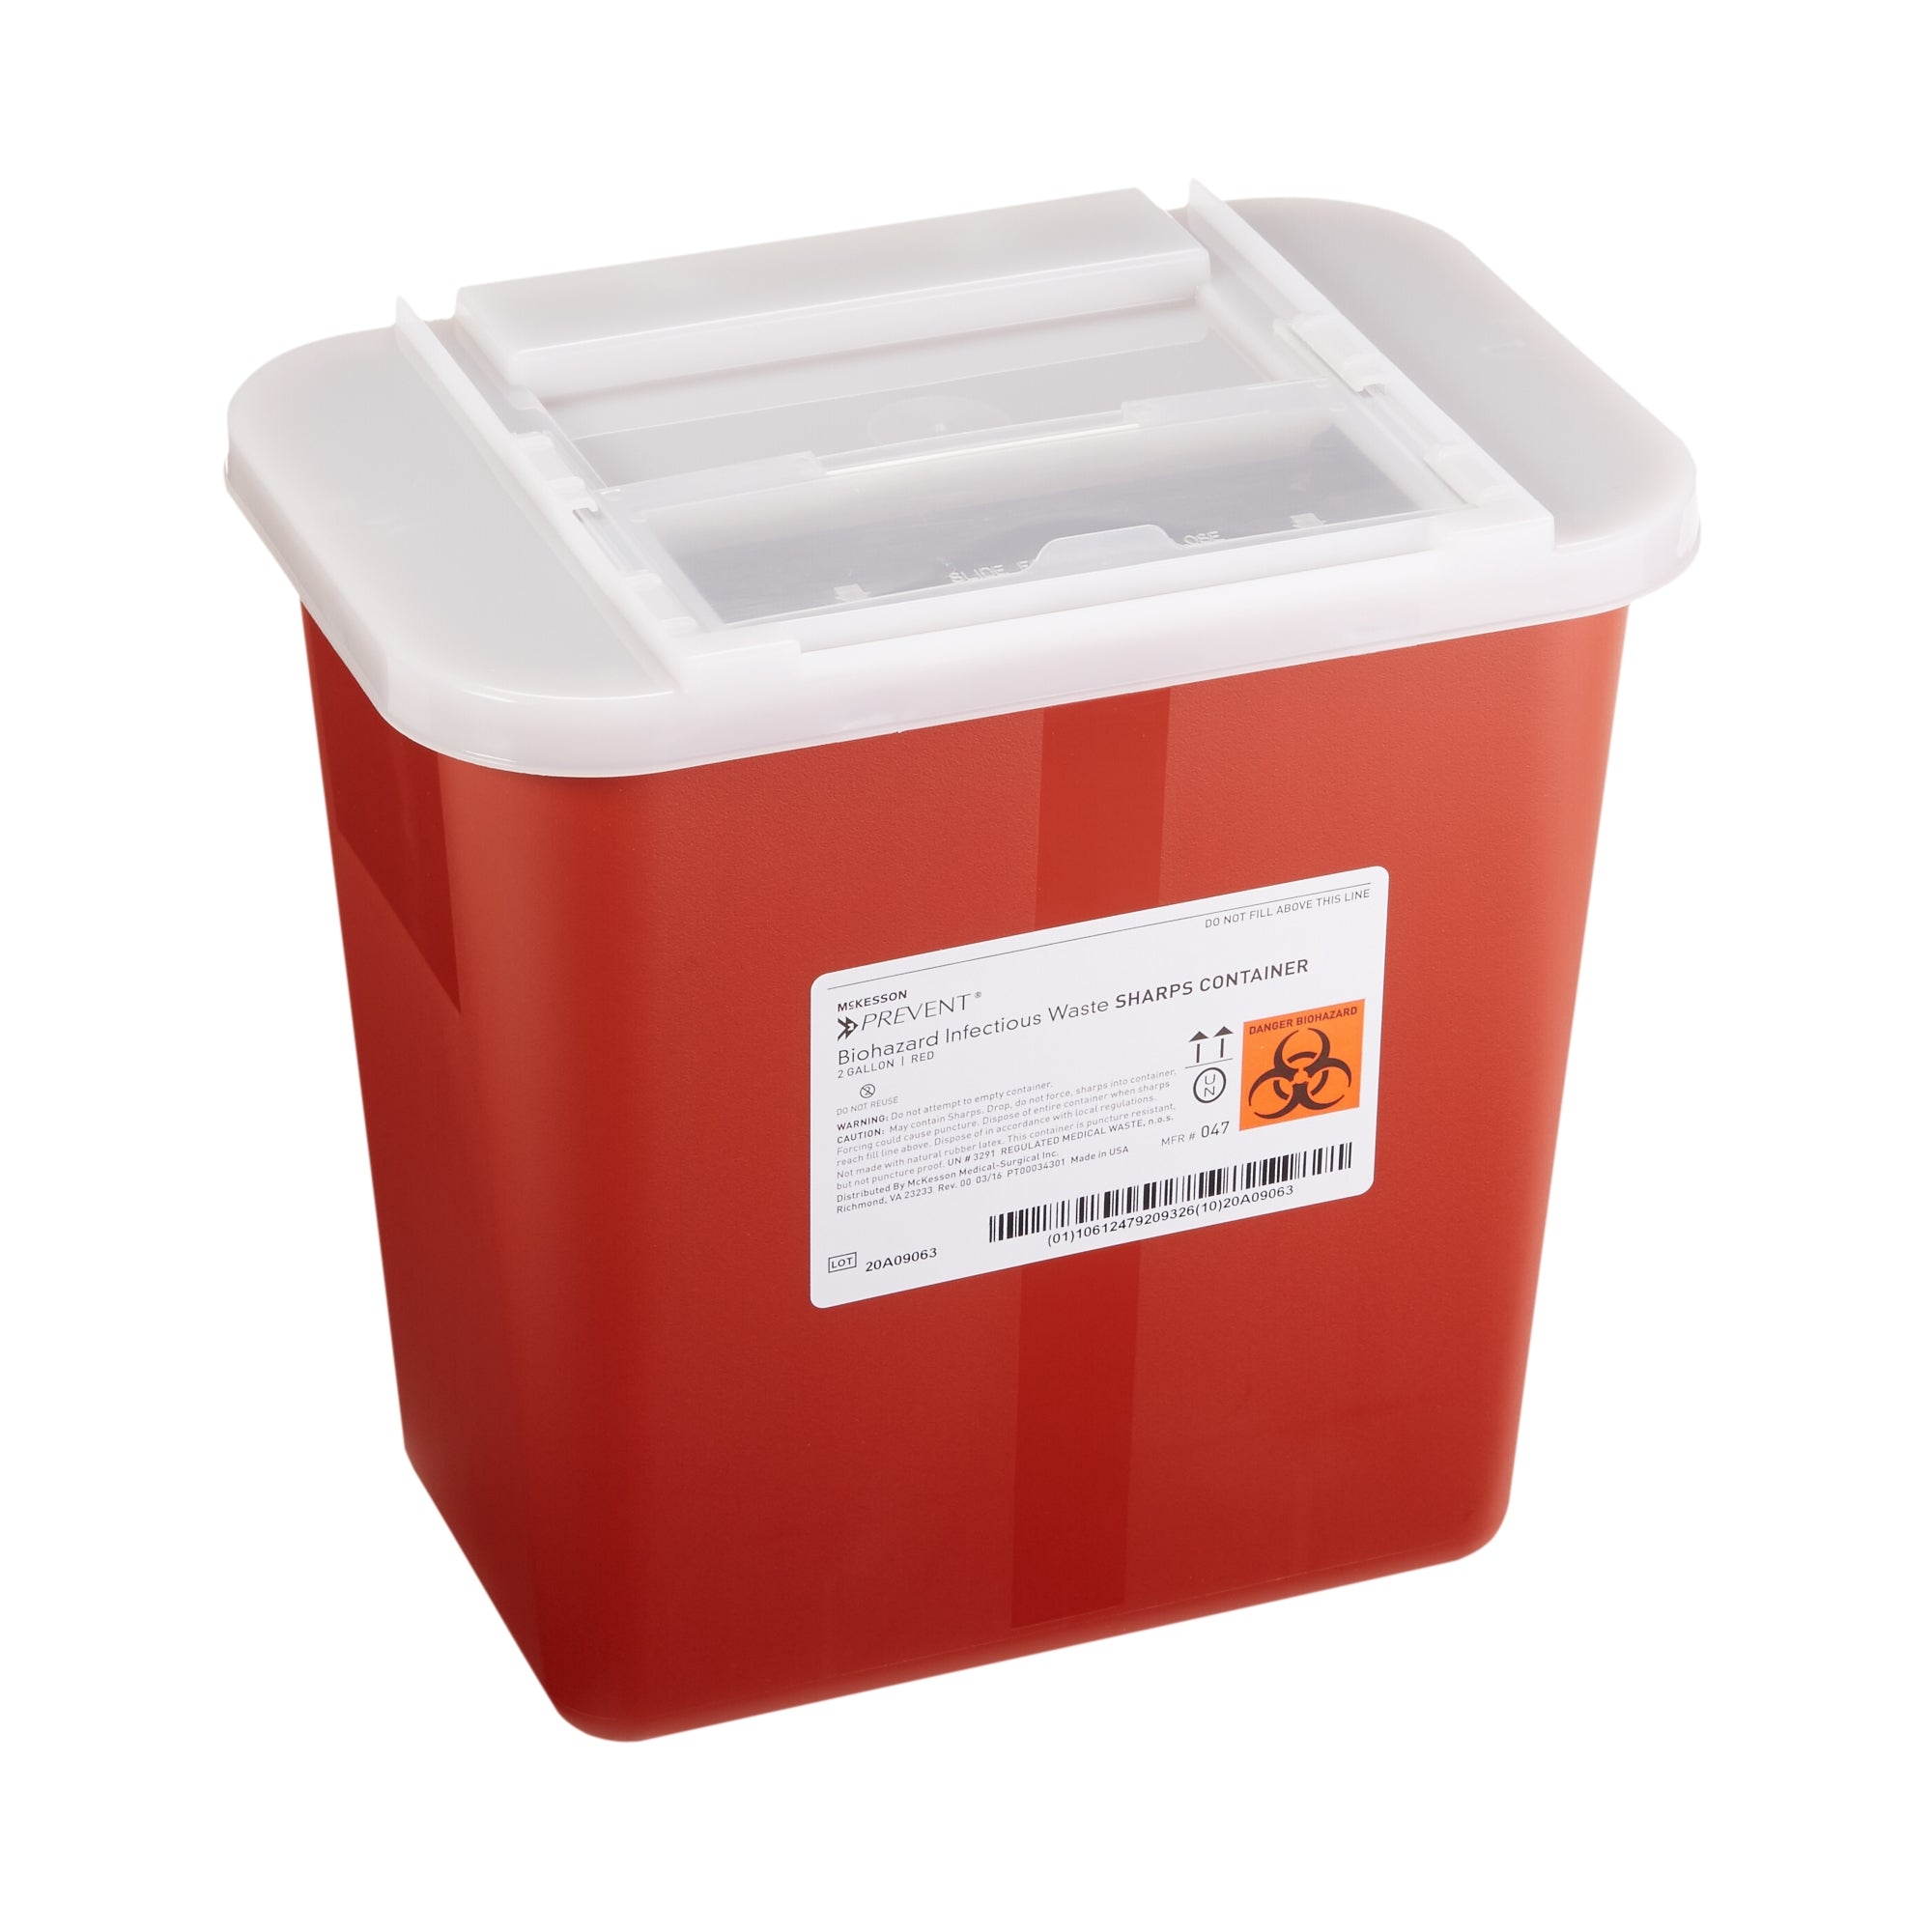 McKesson Prevent® 2 Gal Sharps Container - Secure & Puncture-Resistant